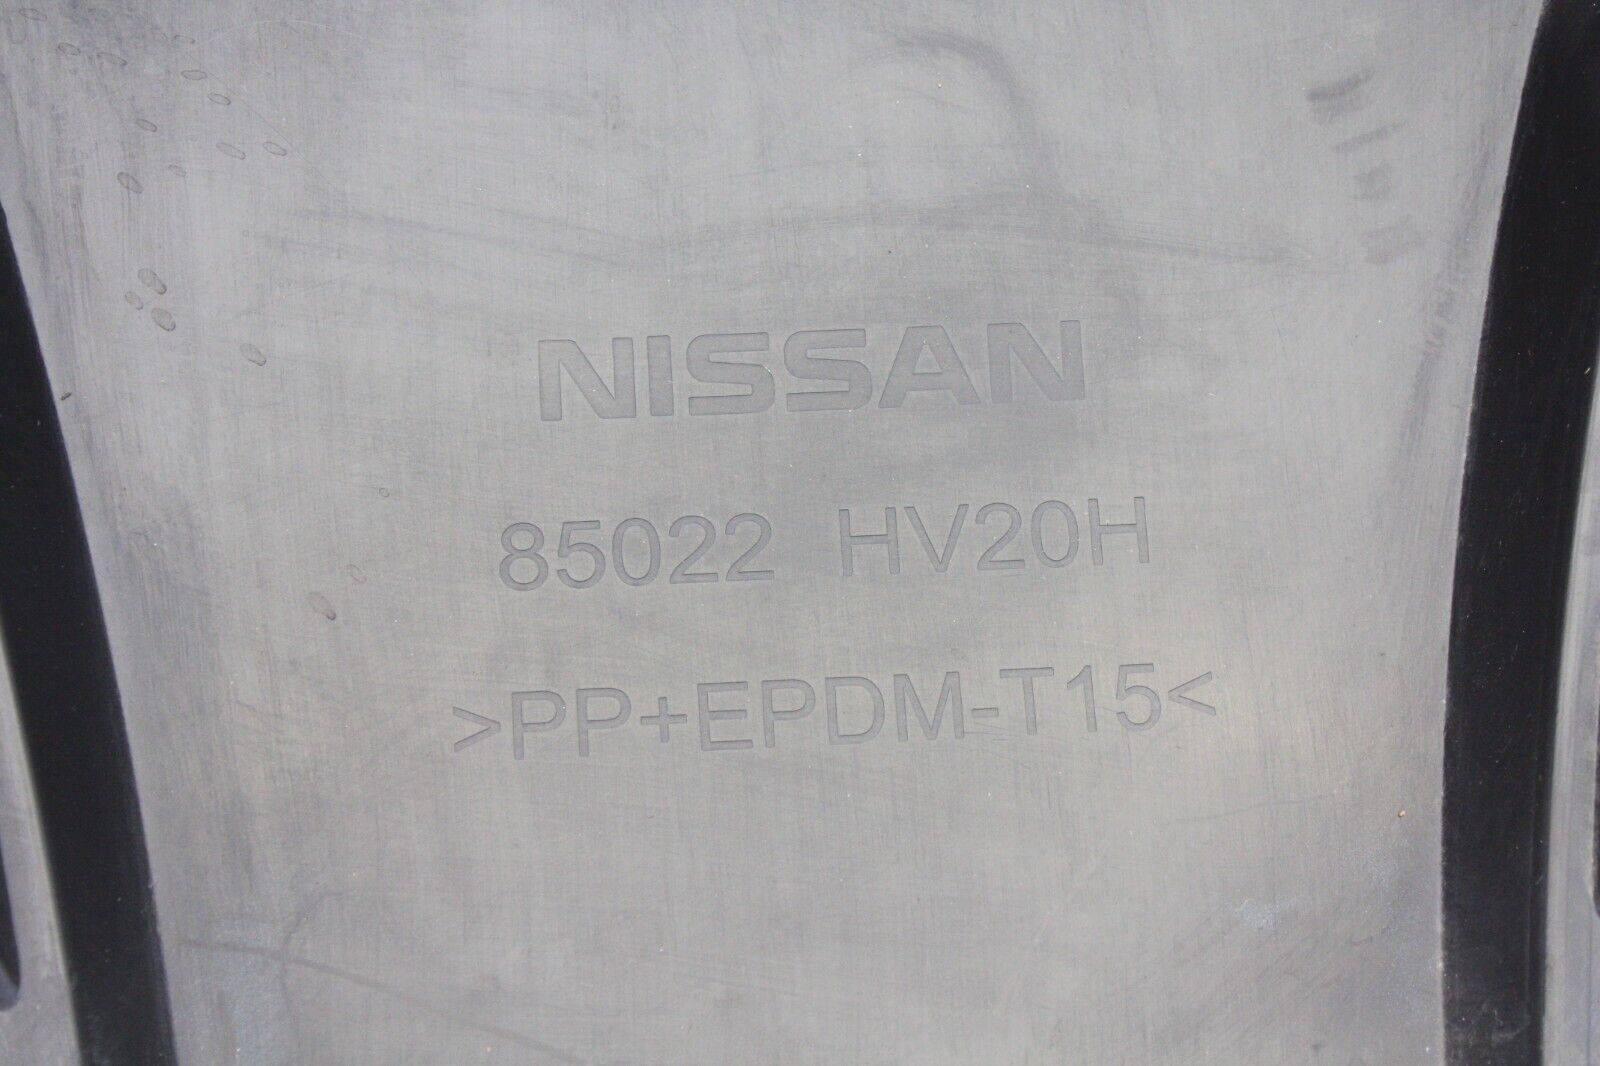 Nissan-Qashqai-Rear-Bumper-2017-TO-2021-85022-HV20H-Genuine-DAMAGED-176328415583-17